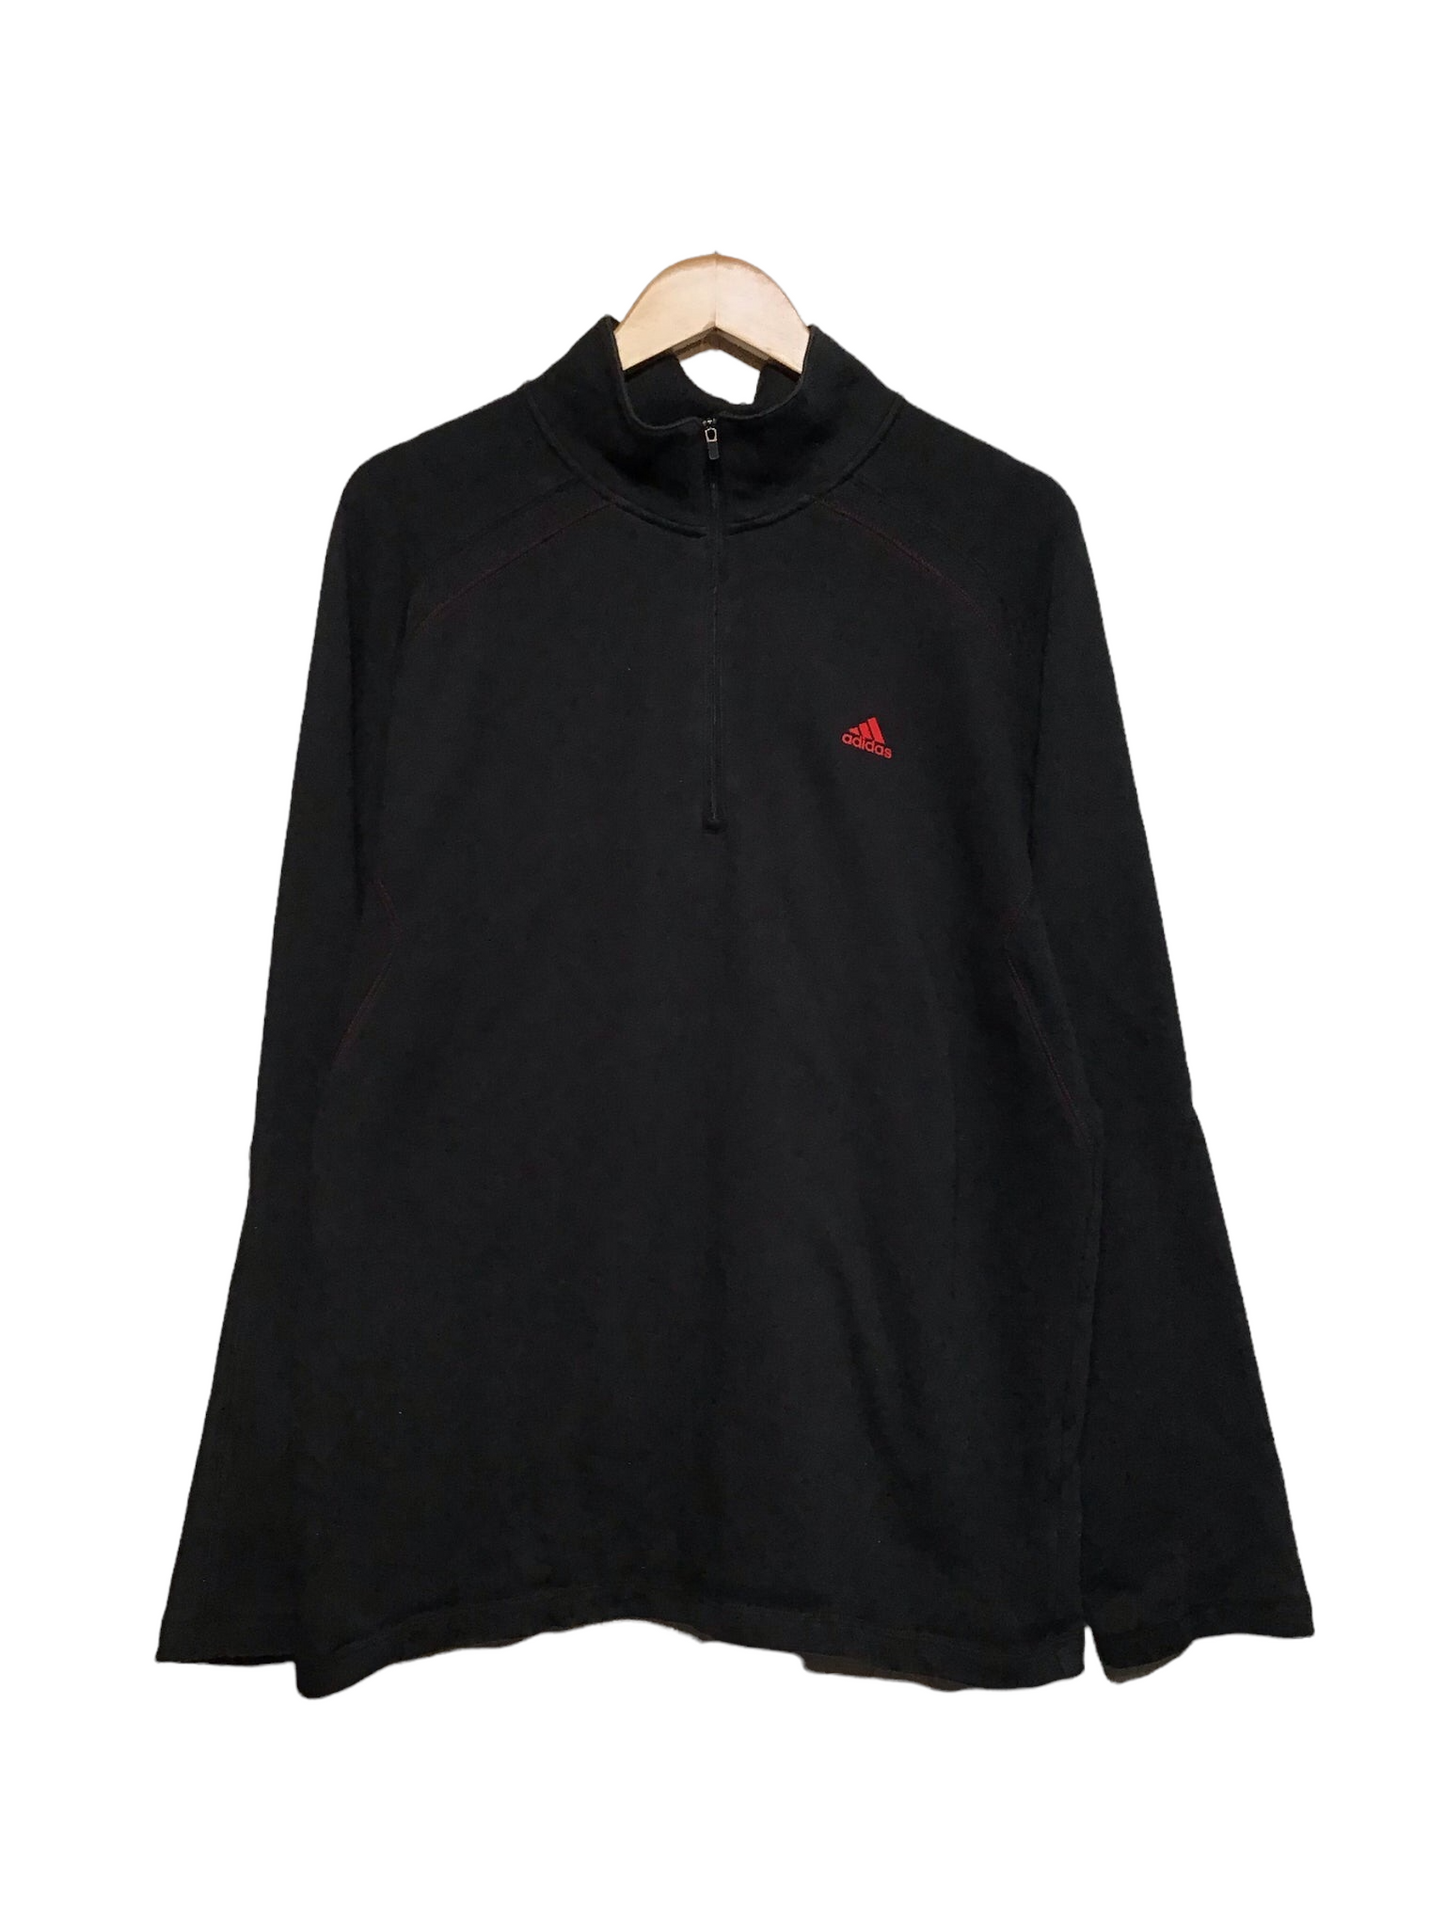 Adidas Half Zip Up Sweatshirt (Size XL)